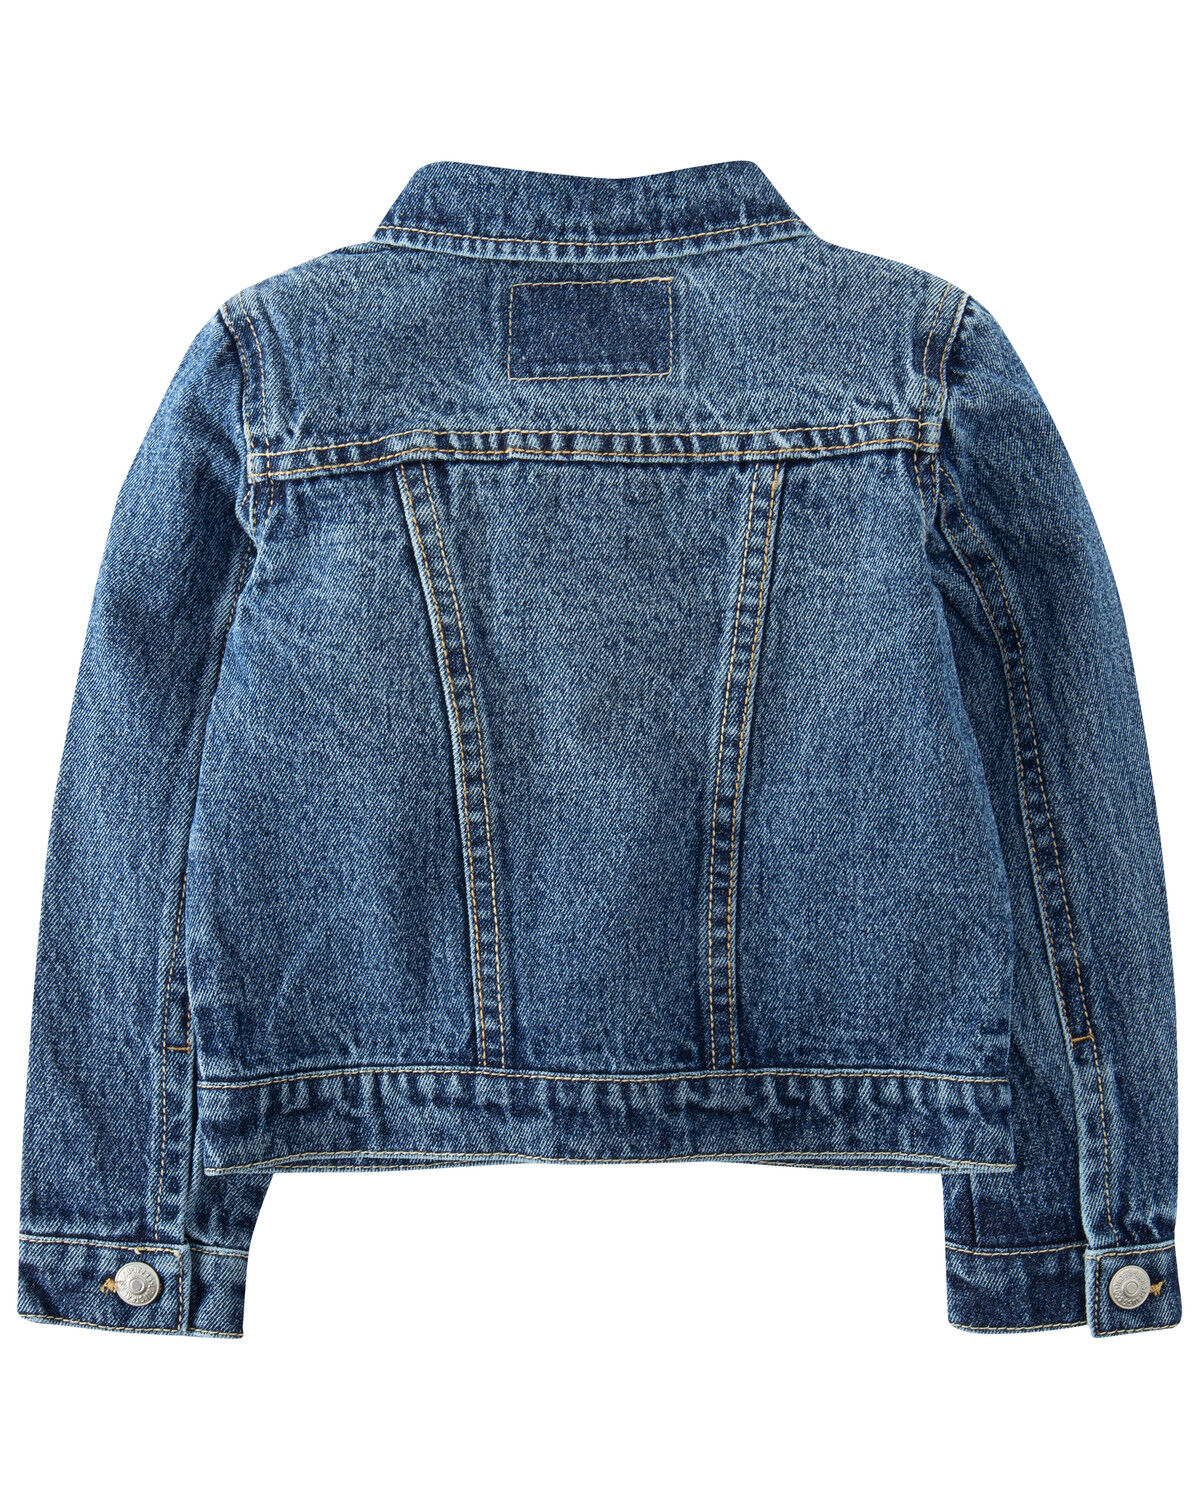 levi's toddler jacket